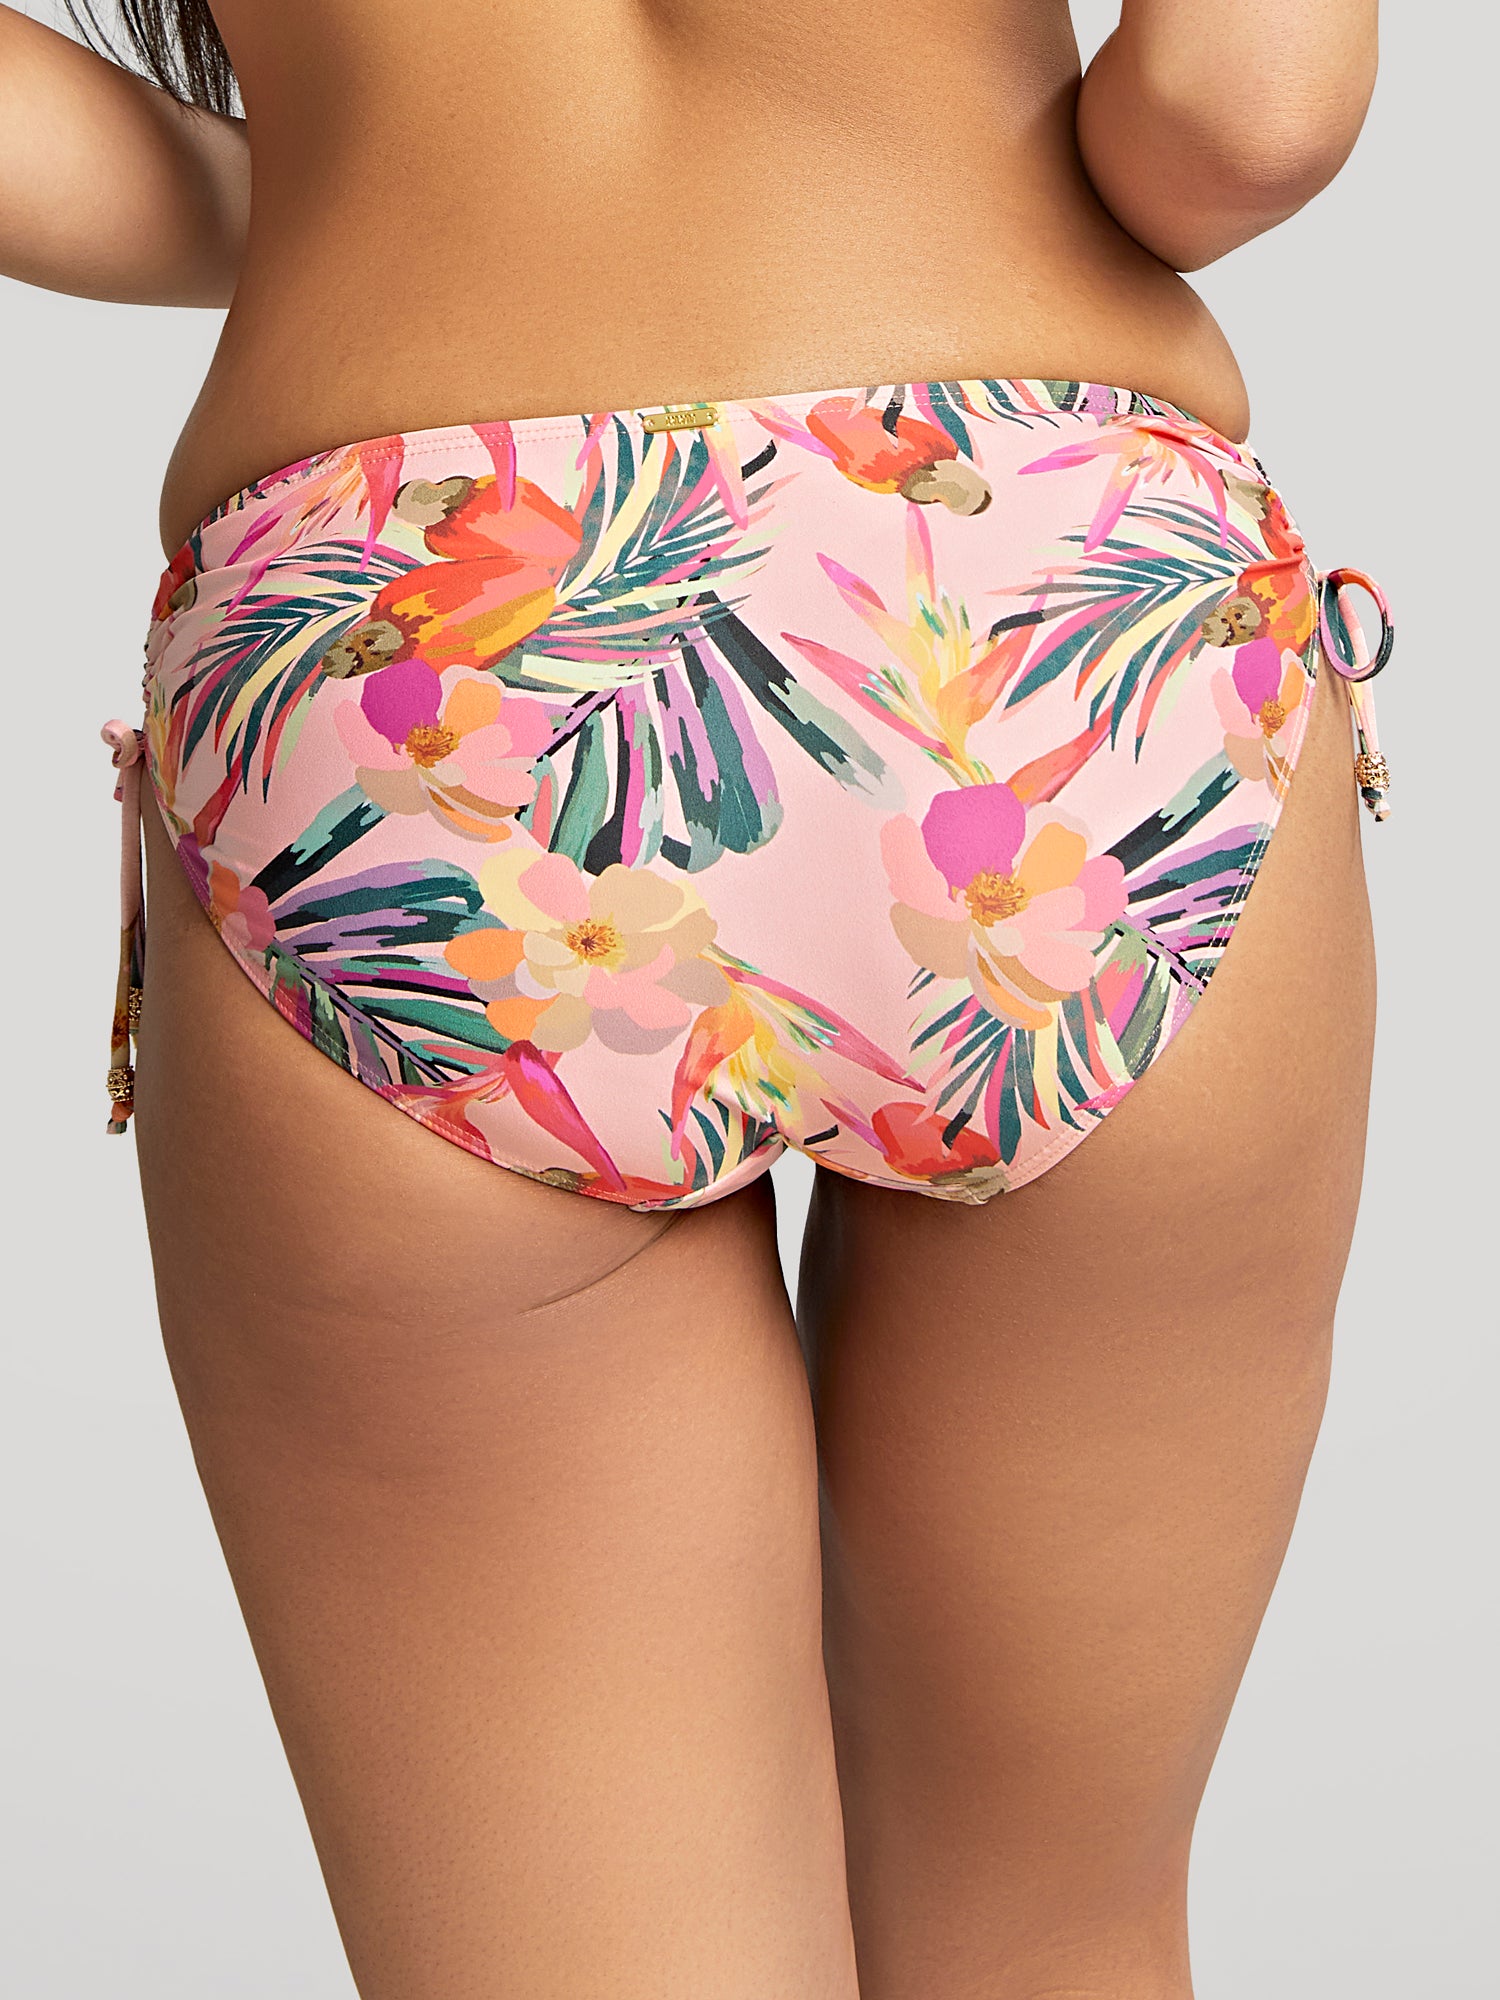 Panache Paradise Drawside Bikini Bottom Pink Tropical